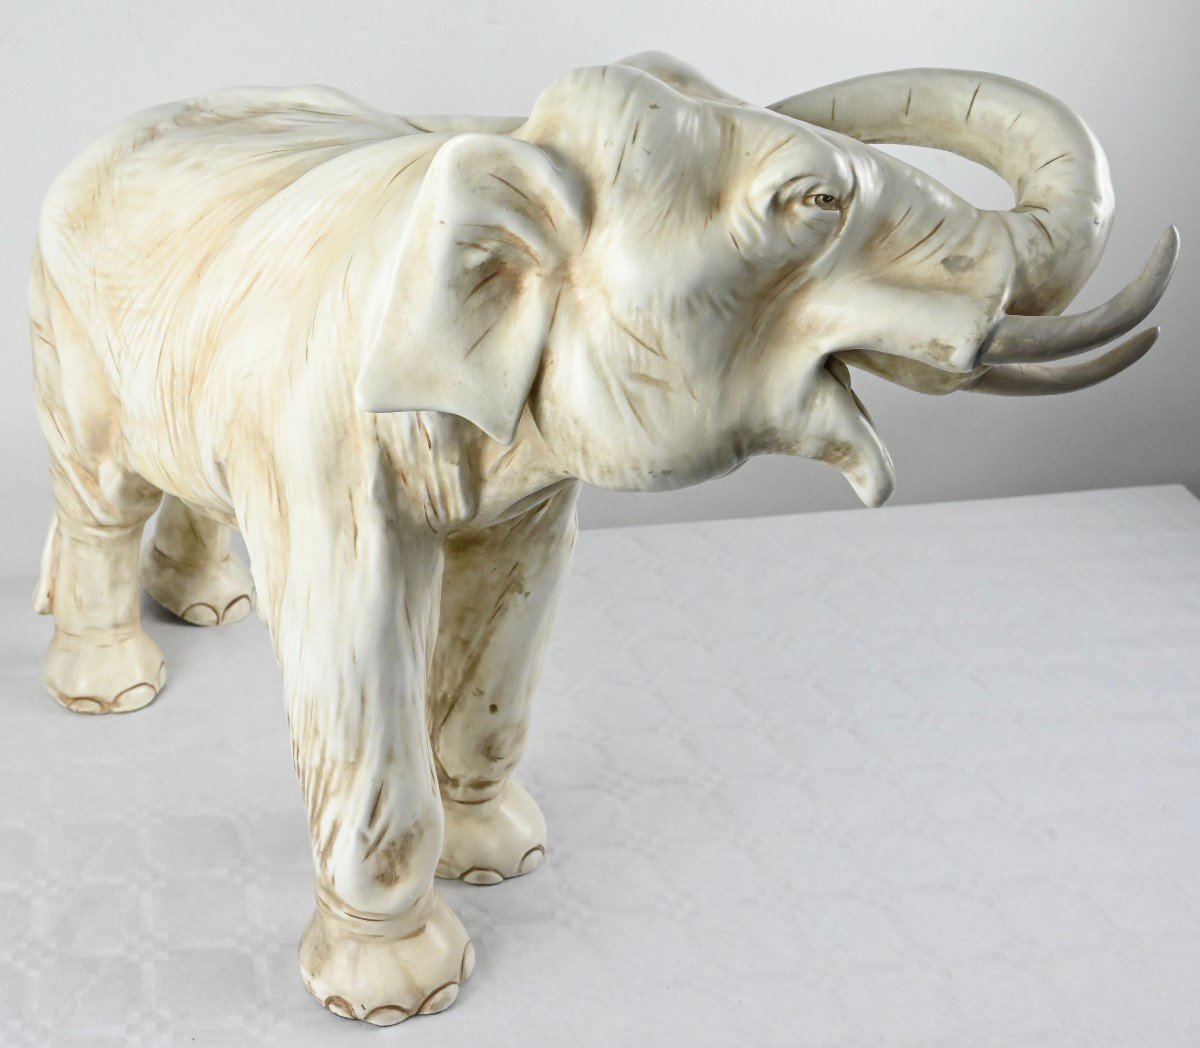 Ceramic Elephant - Germany 1930s